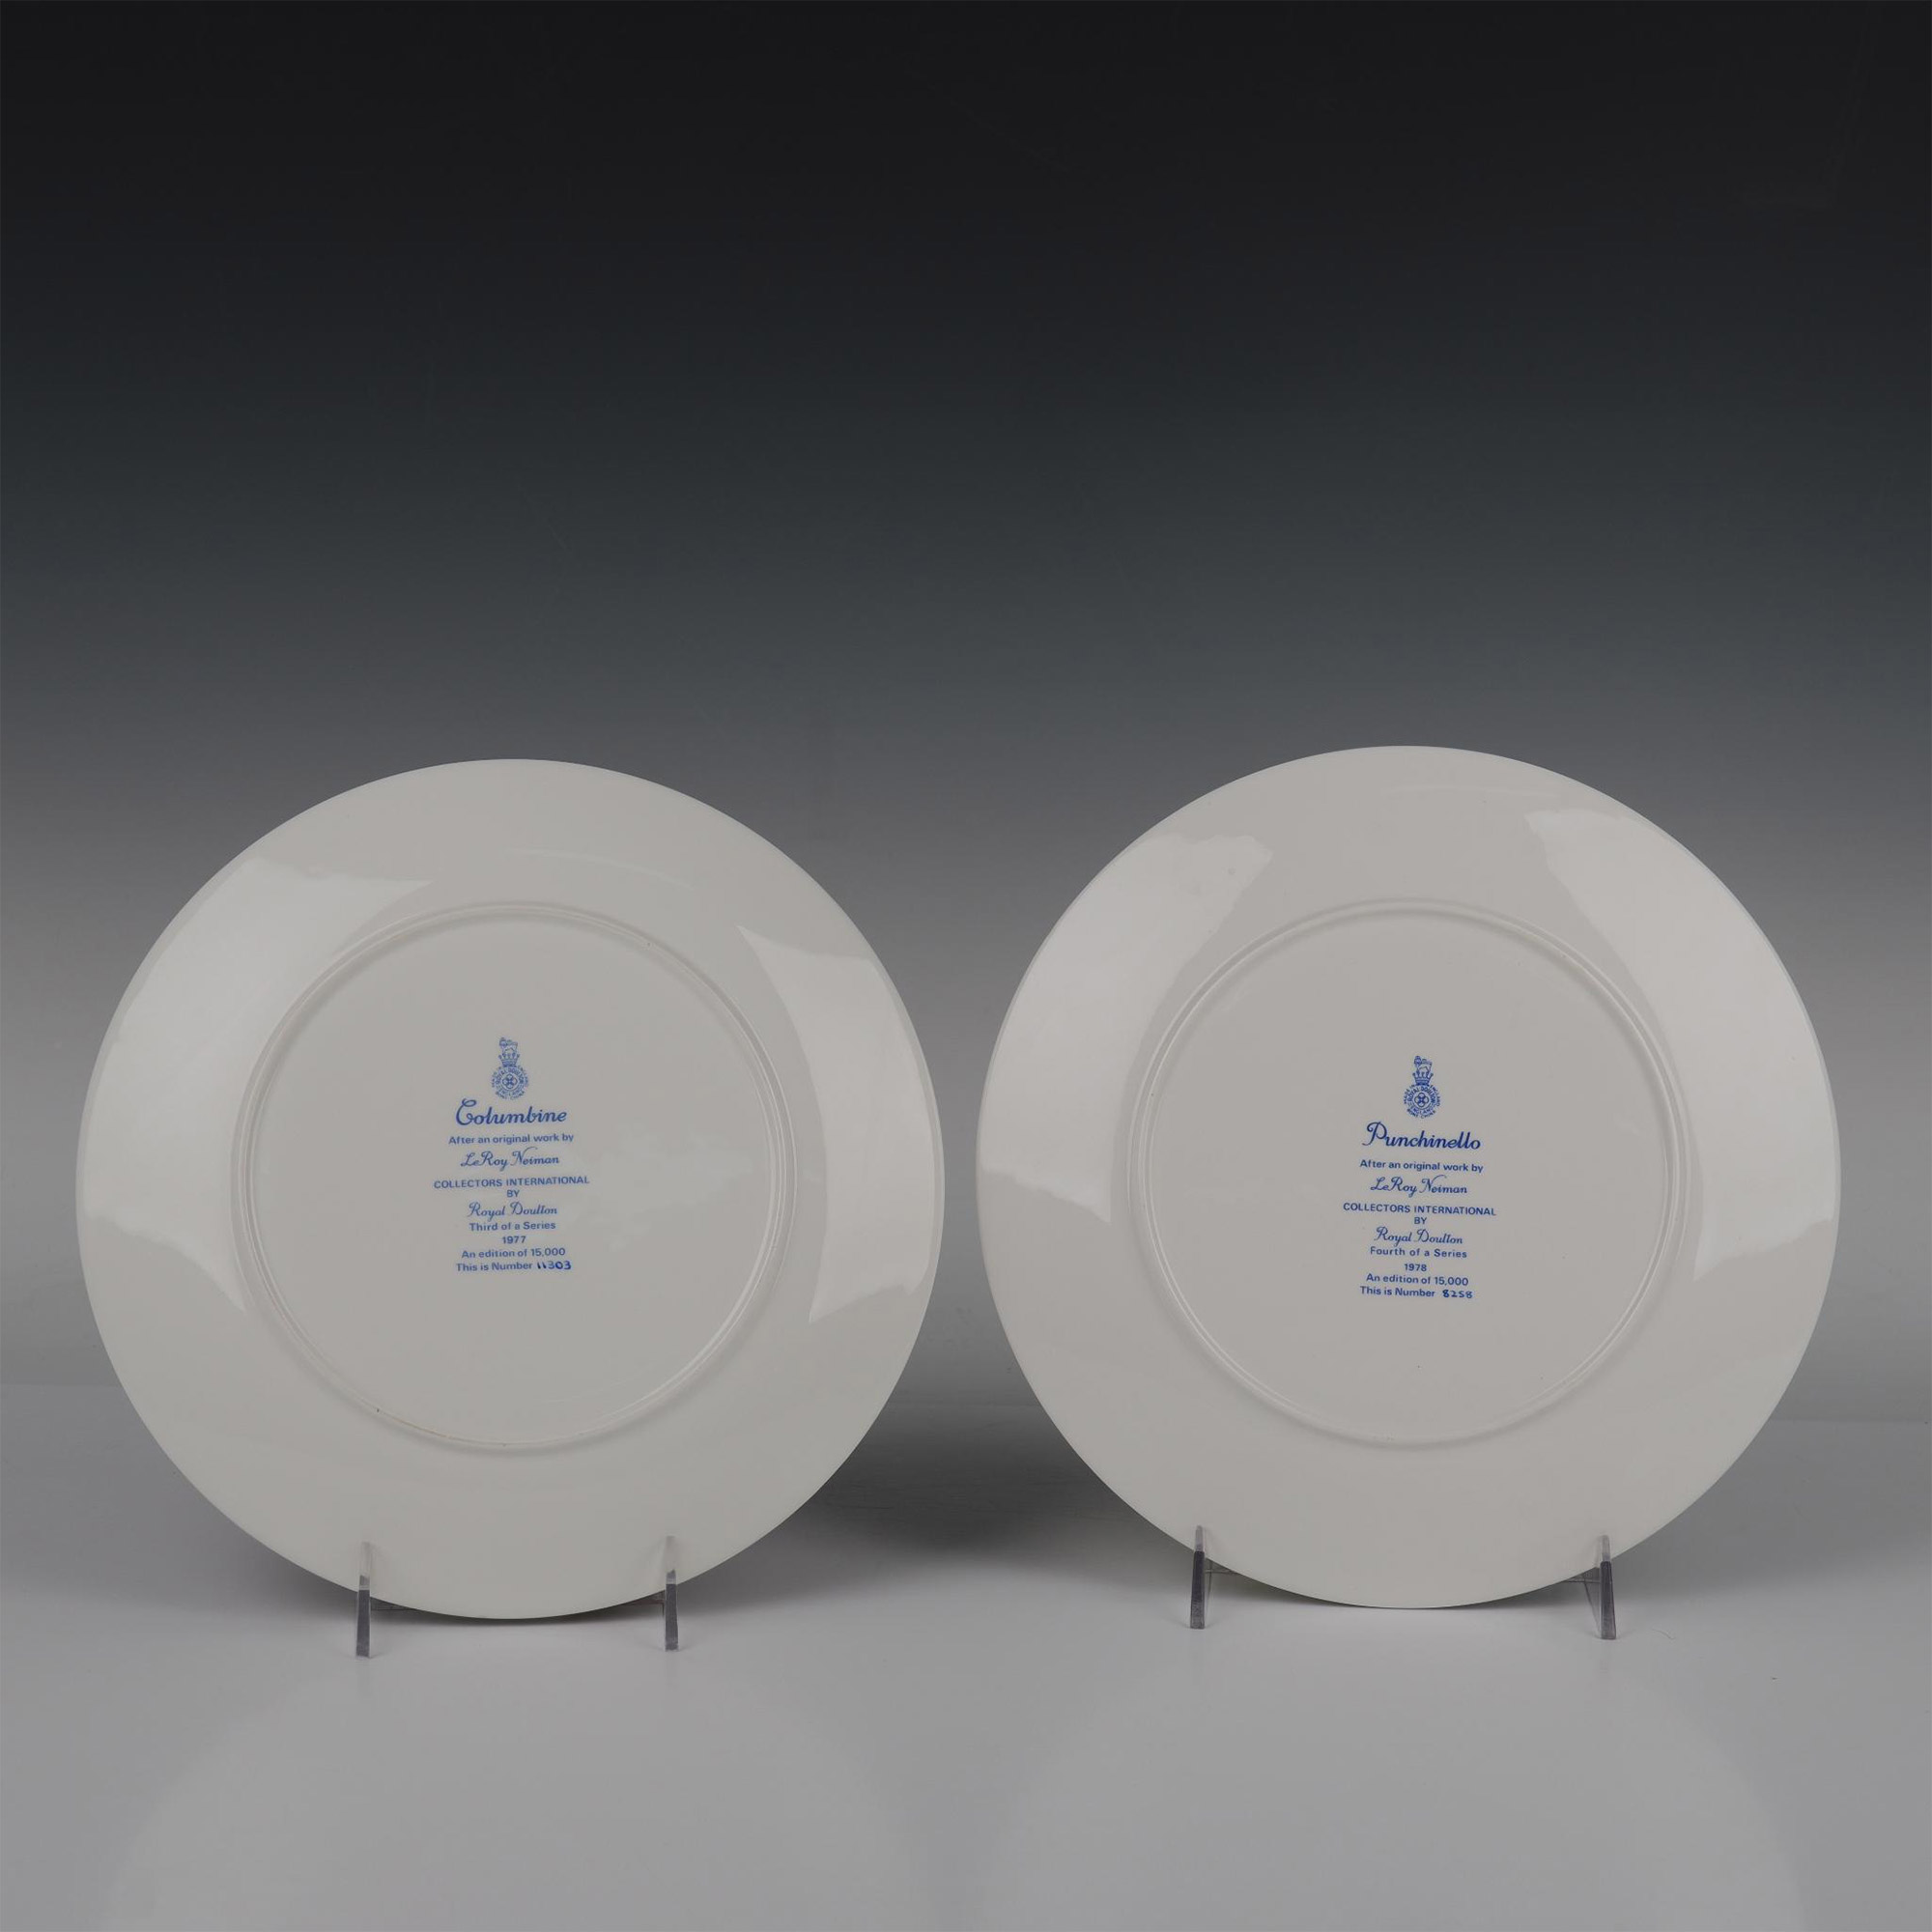 4pc Limited Ed. Royal Doulton Porcelain Art Plates Set - Image 9 of 9